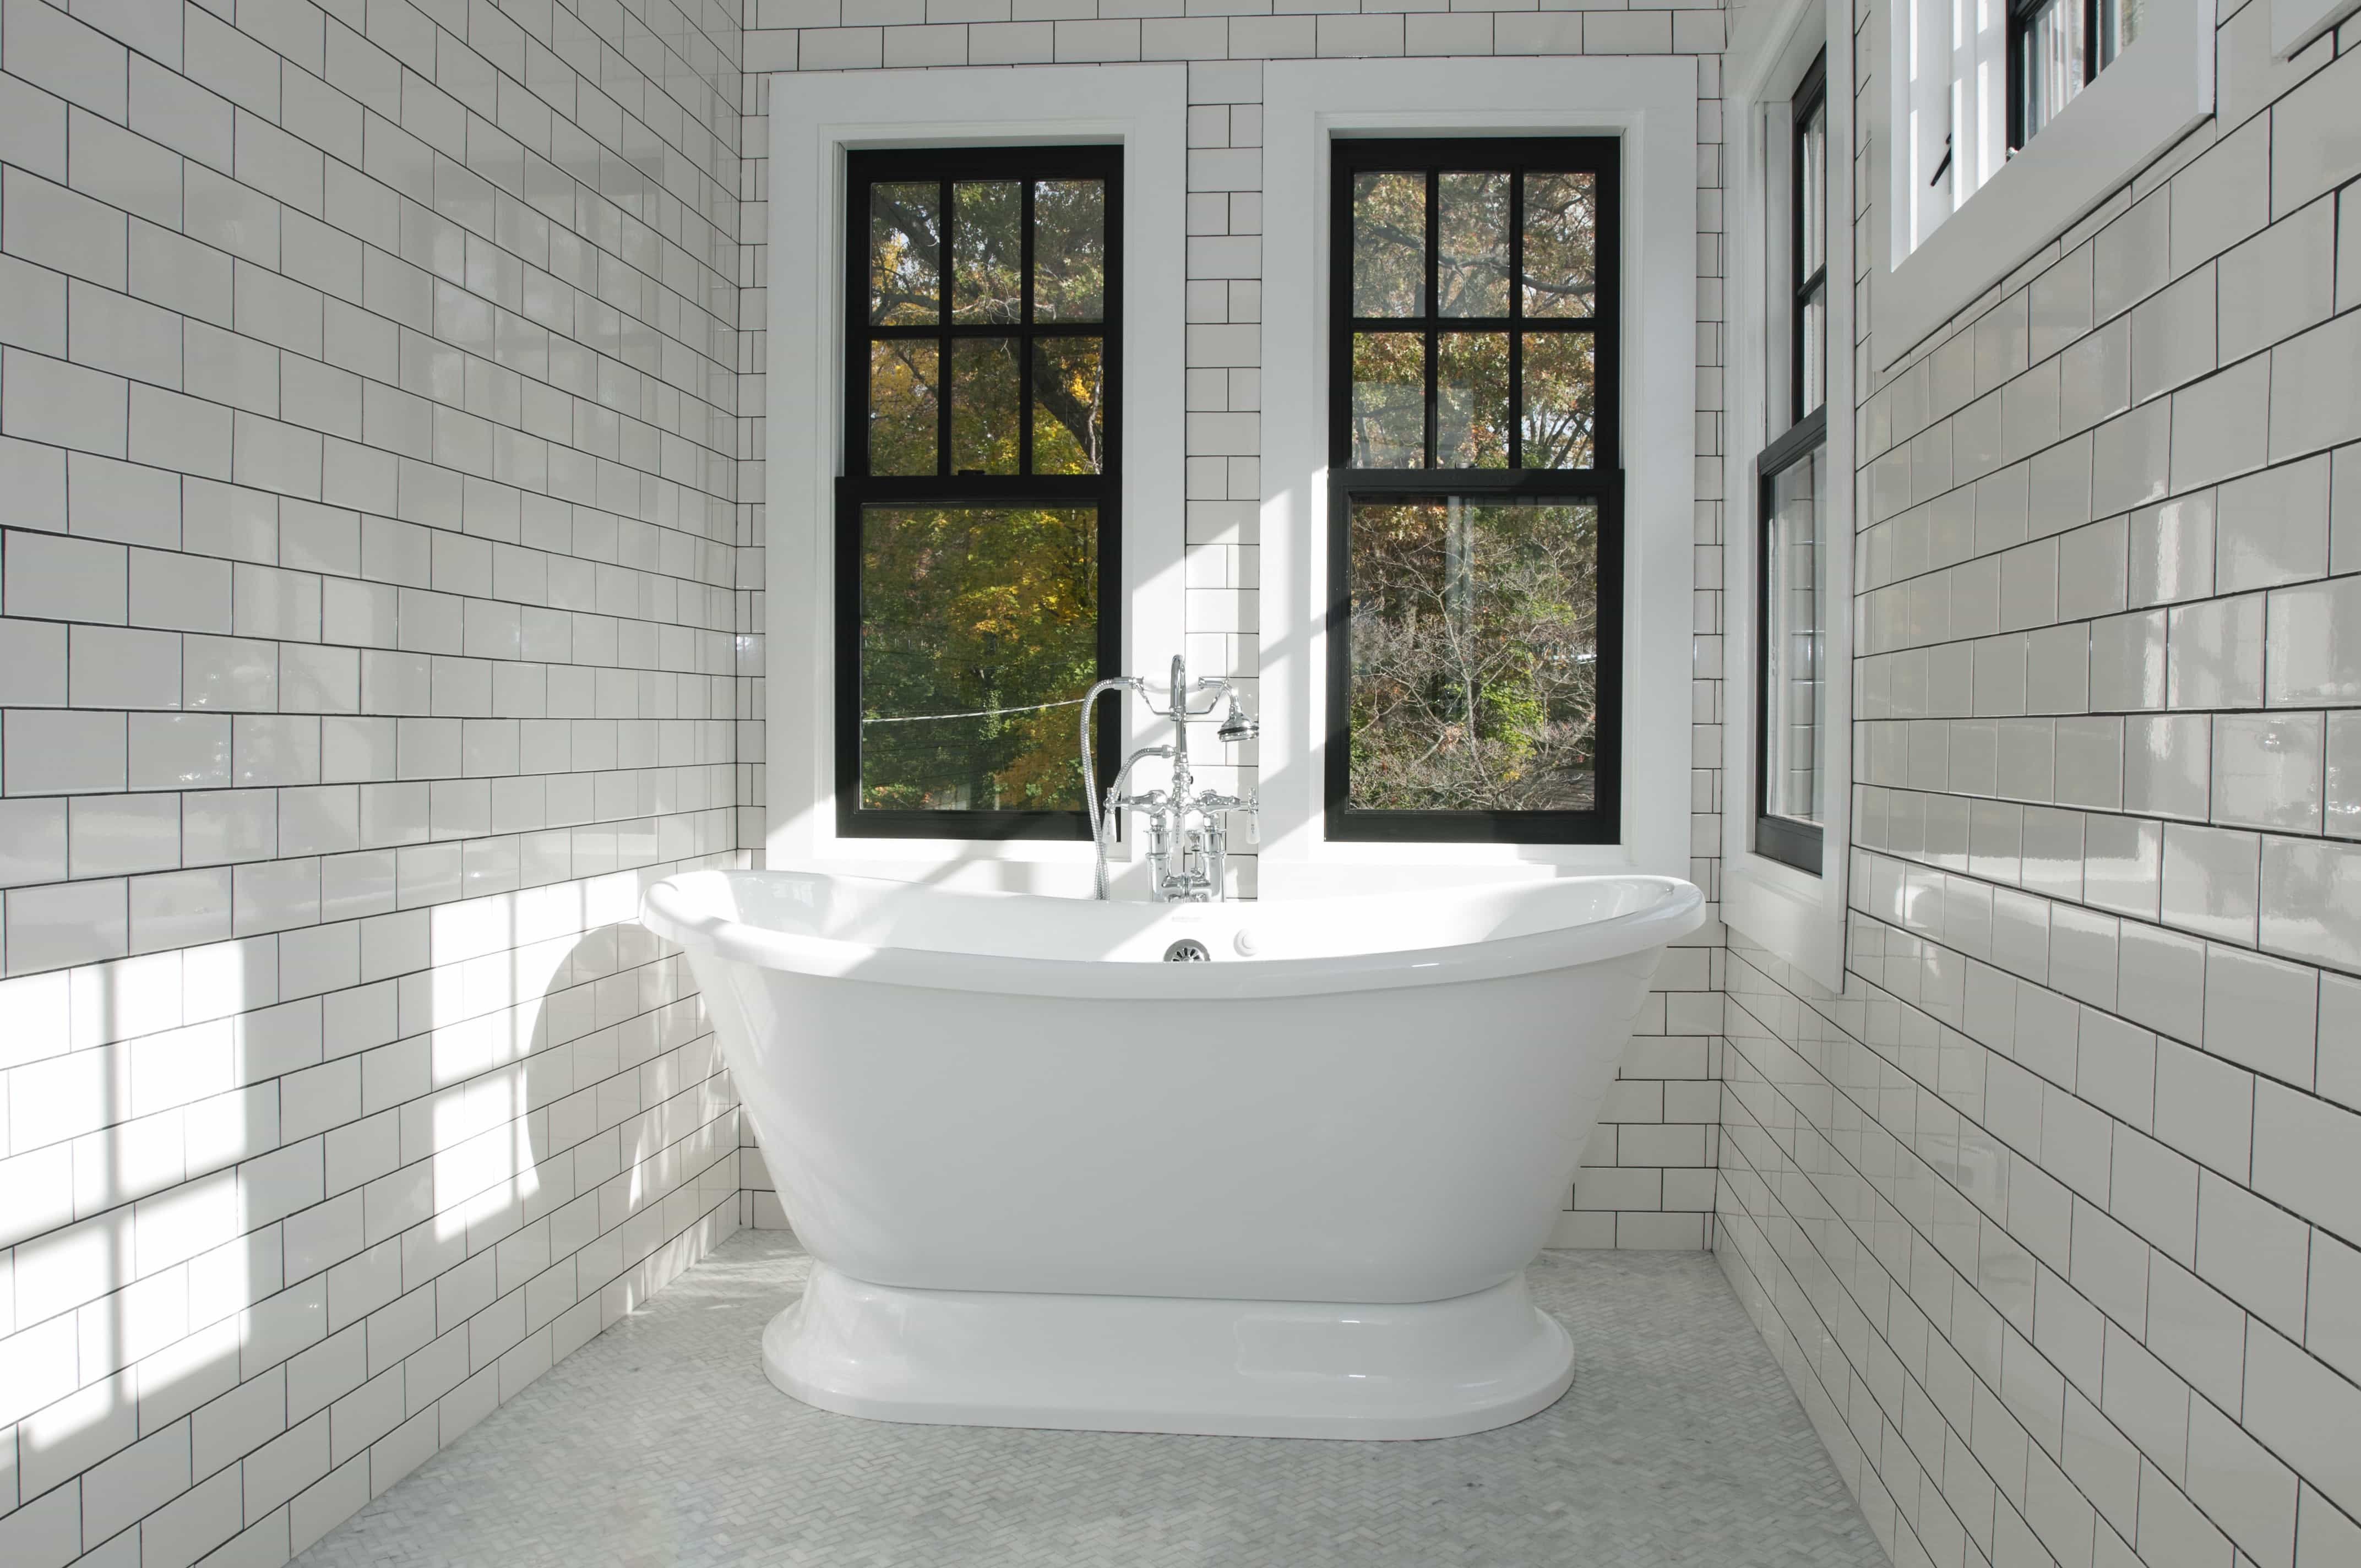 Sleek Tiled Bathroom With Gray Granite Countertops  (View 18 of 29)